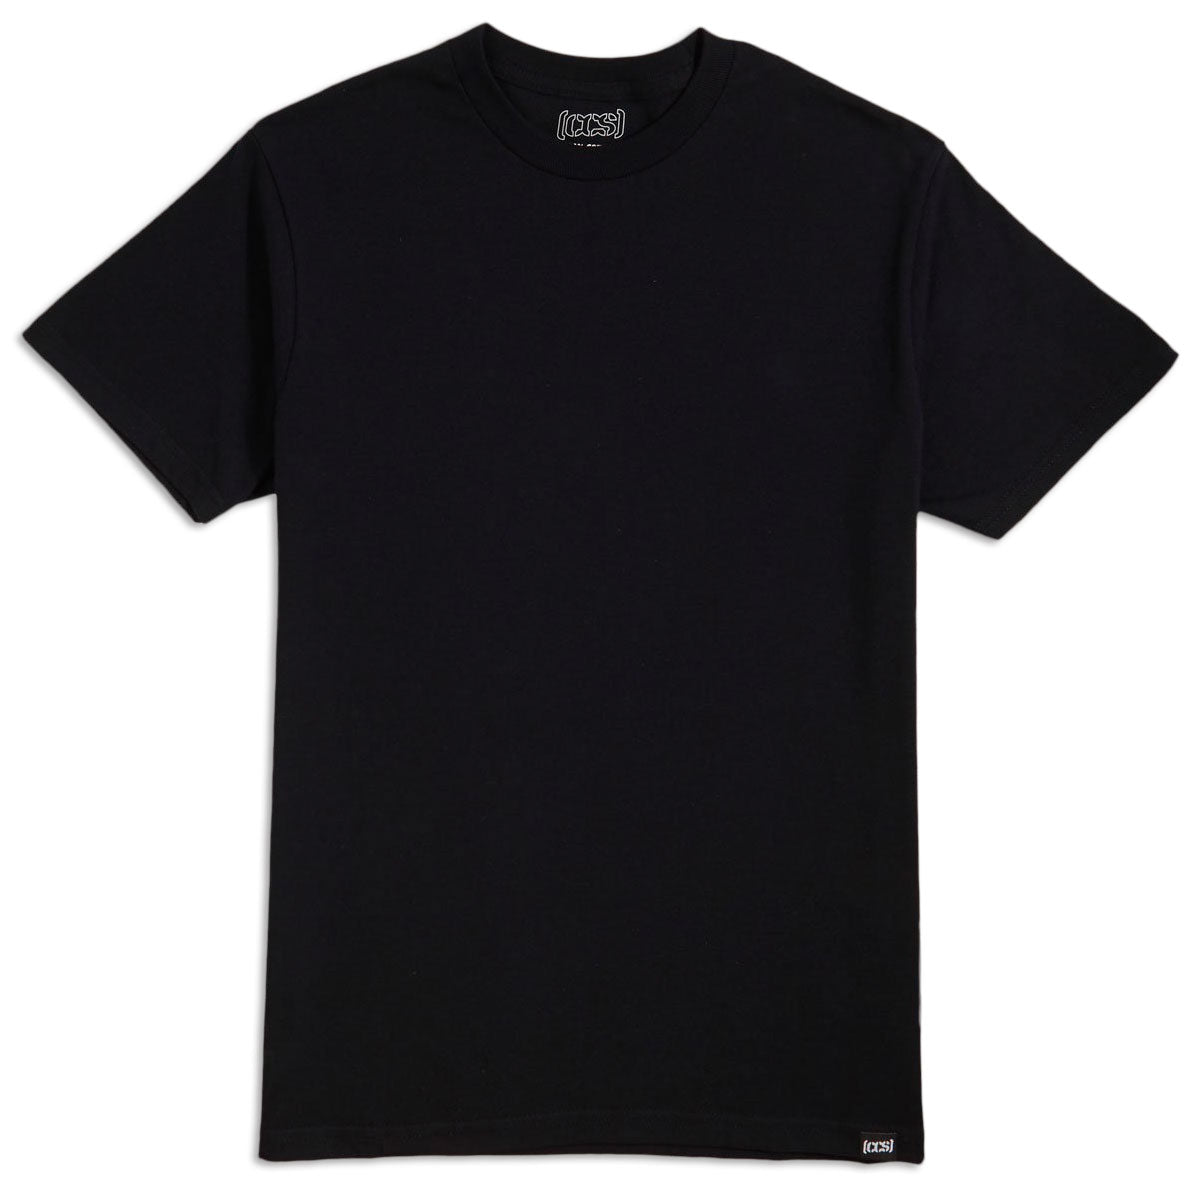 CCS Original Heavyweight T-Shirt - Black image 1